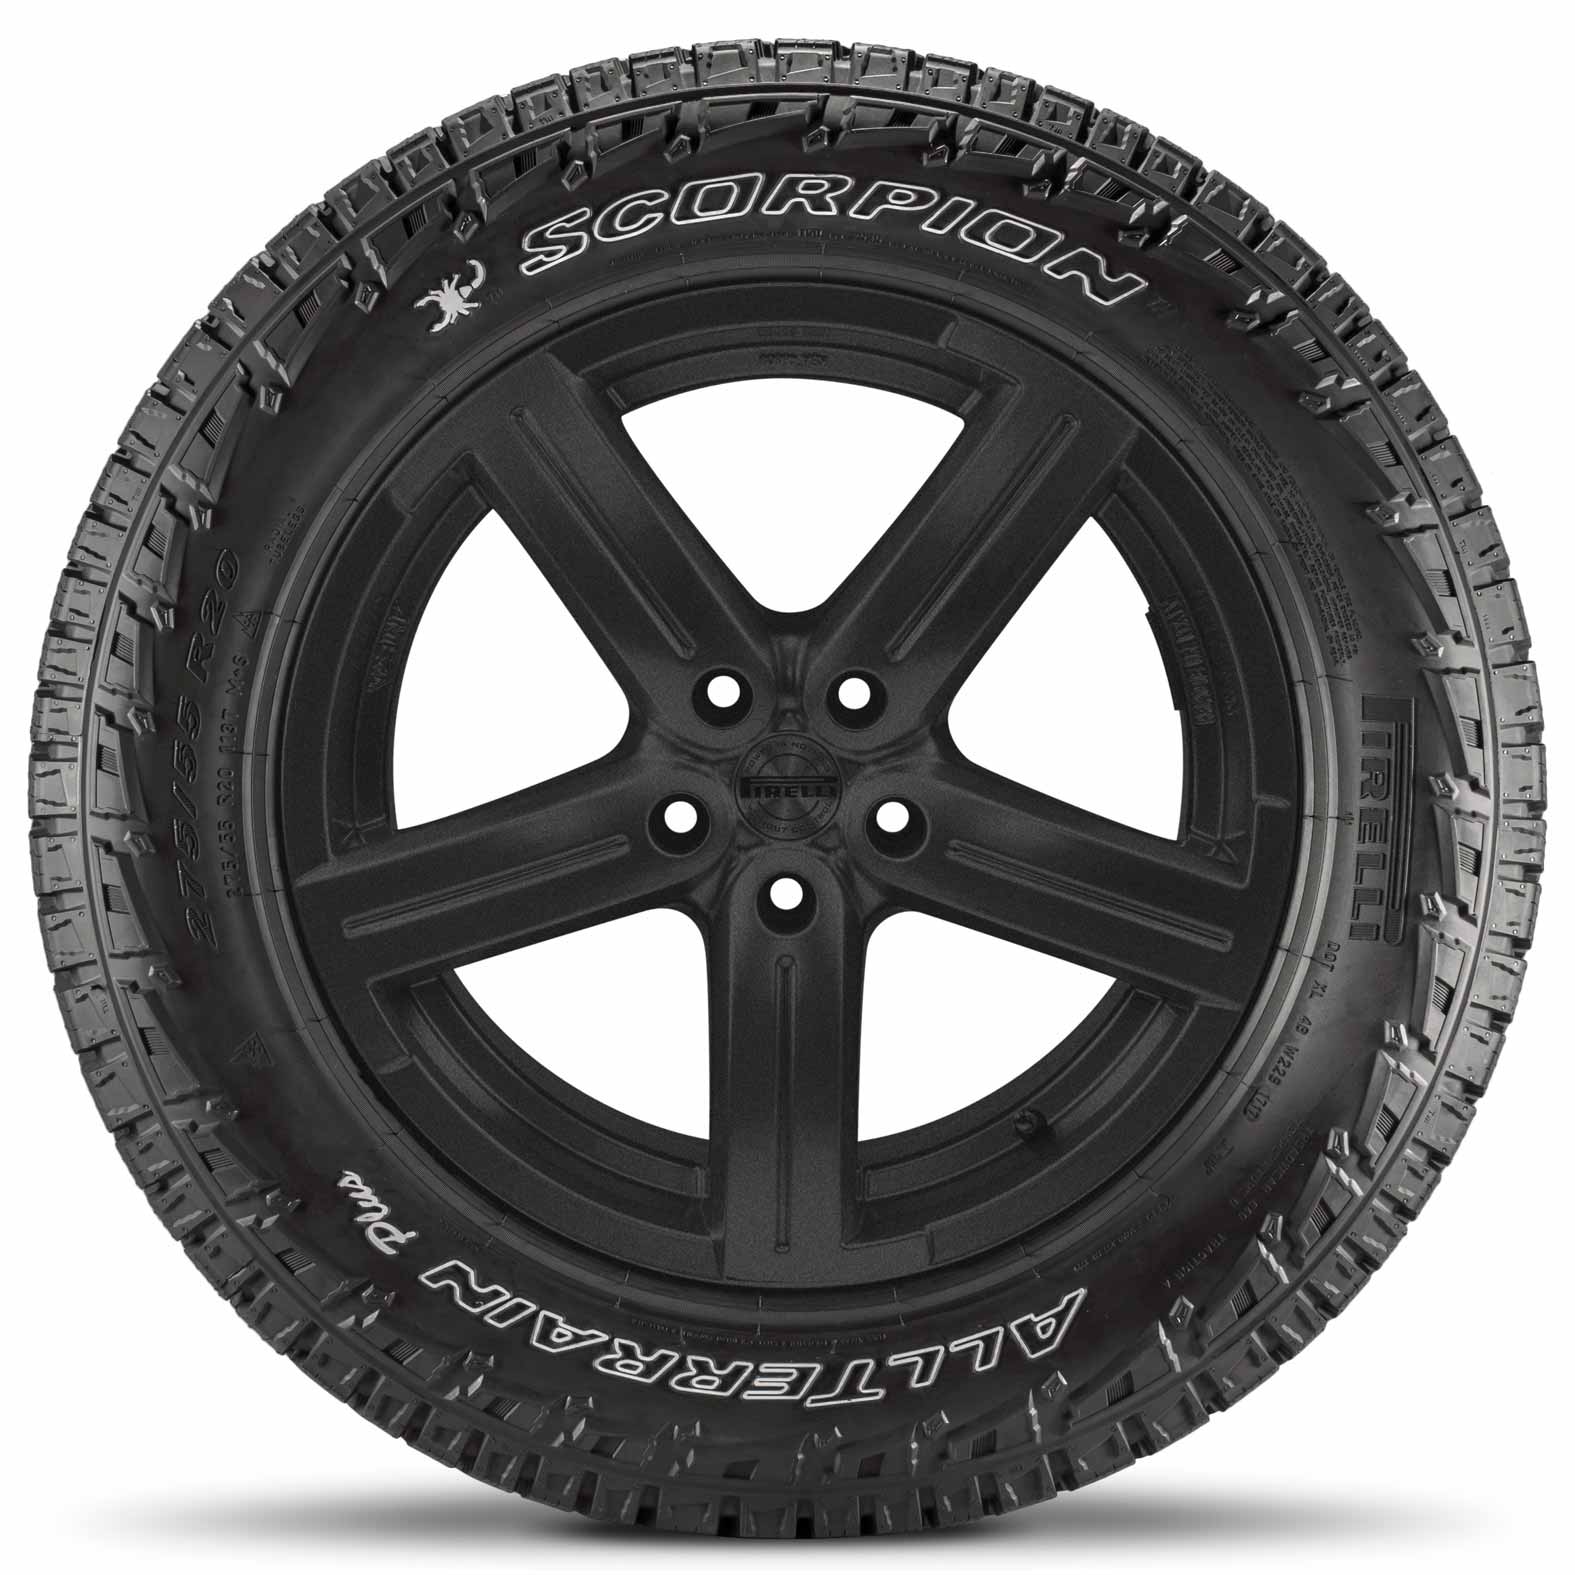 Pirelli Scorpion All-Terrain Plus Tires All-Terrain Kal Tire | for